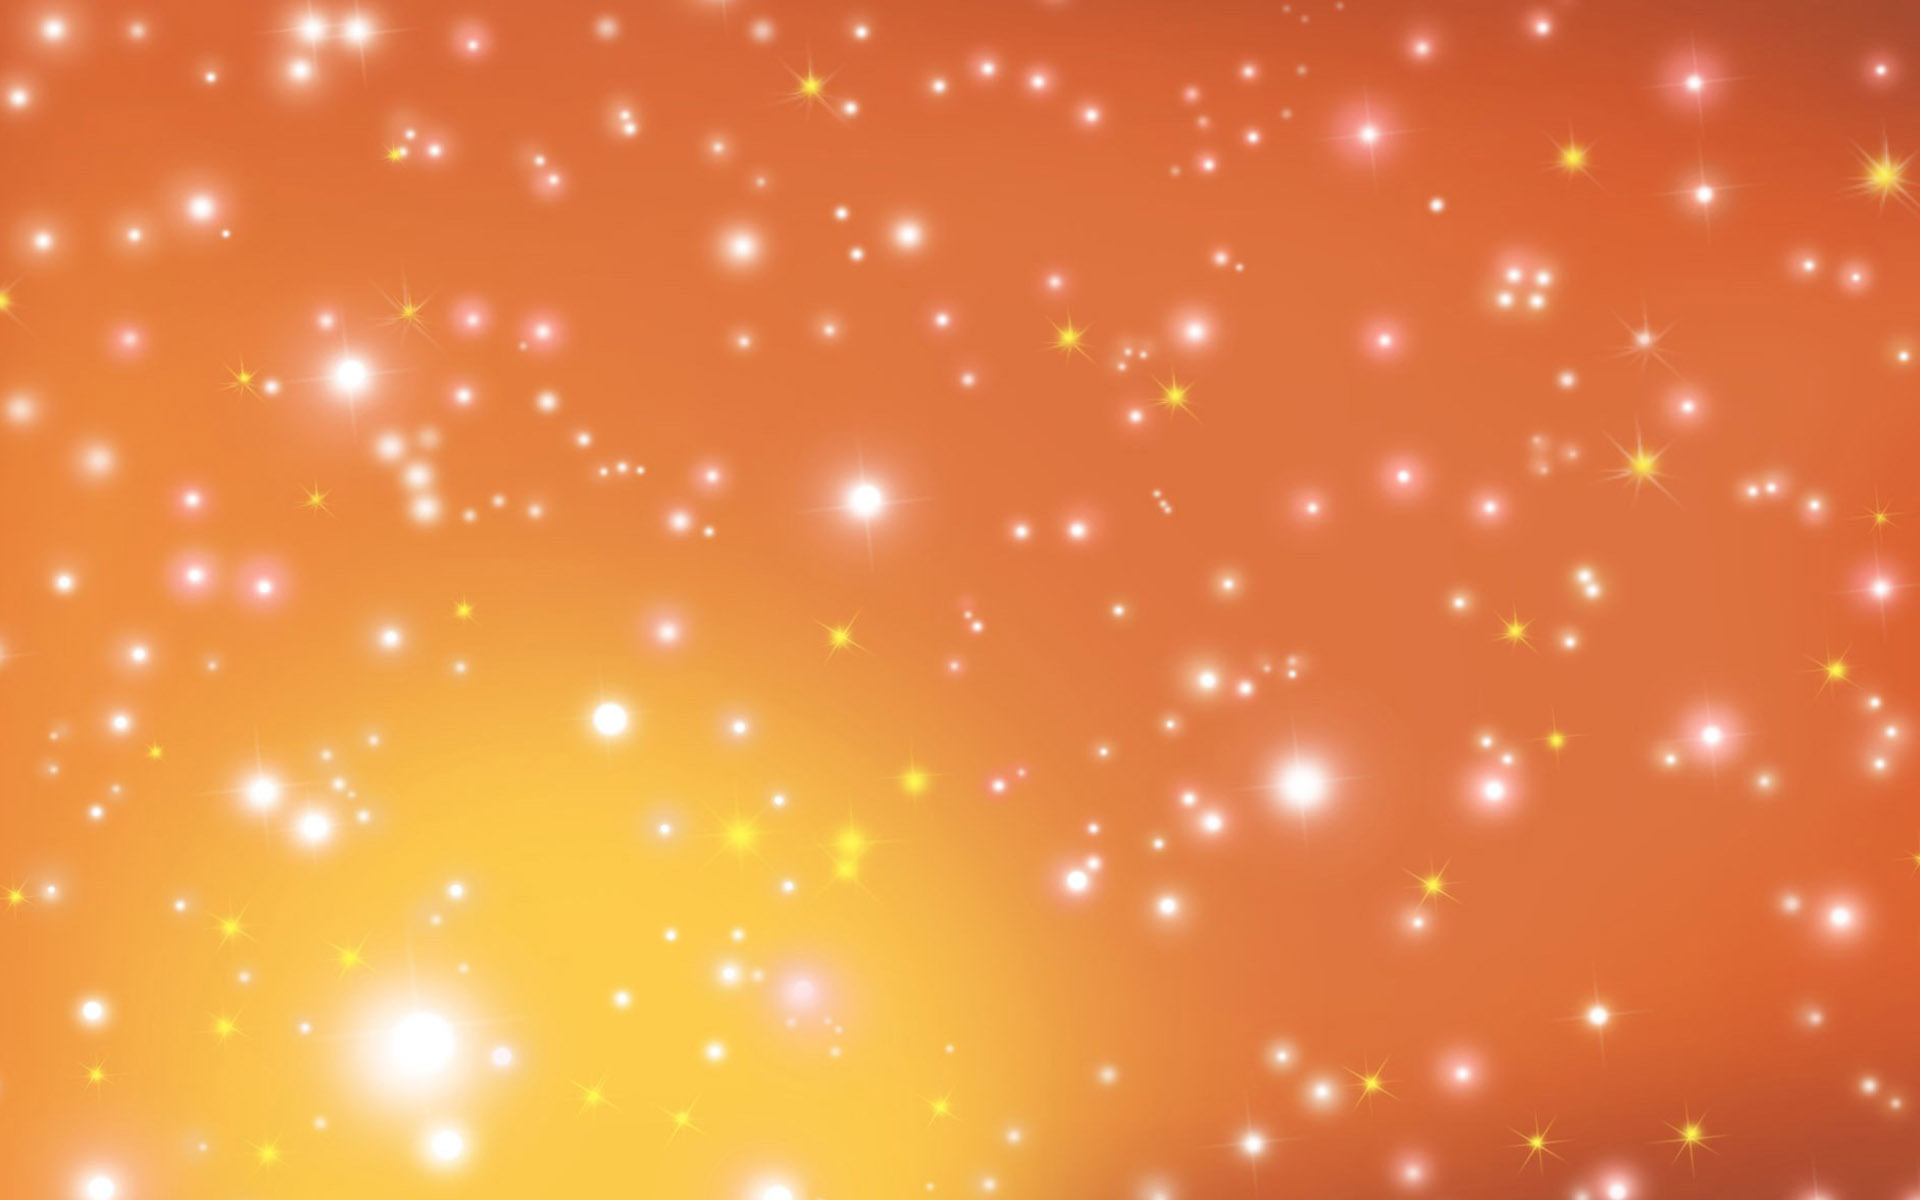 Yellow Orange Glitter Background with Stars Stock Image - Image of bokeh,  stars: 231279687